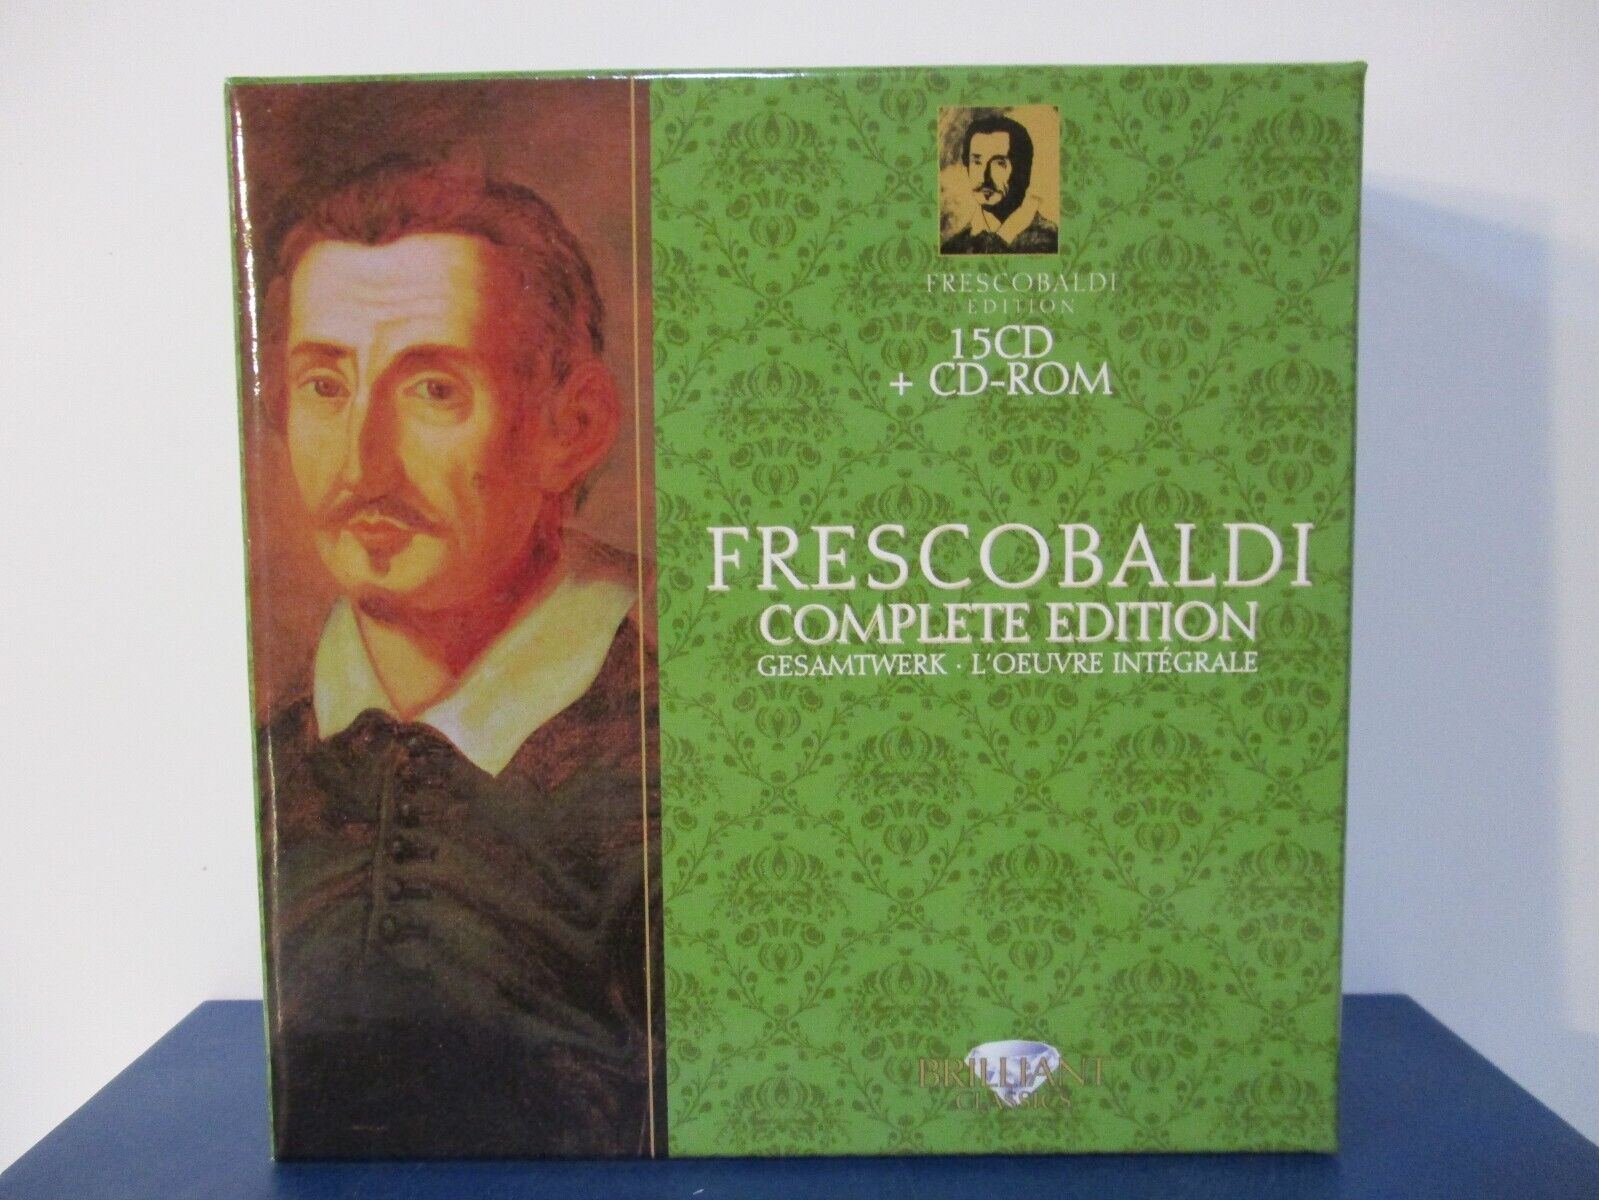 Frescobaldi Complete Edition - 15 CD & CD-ROM Set - MINT condition - E24-1096